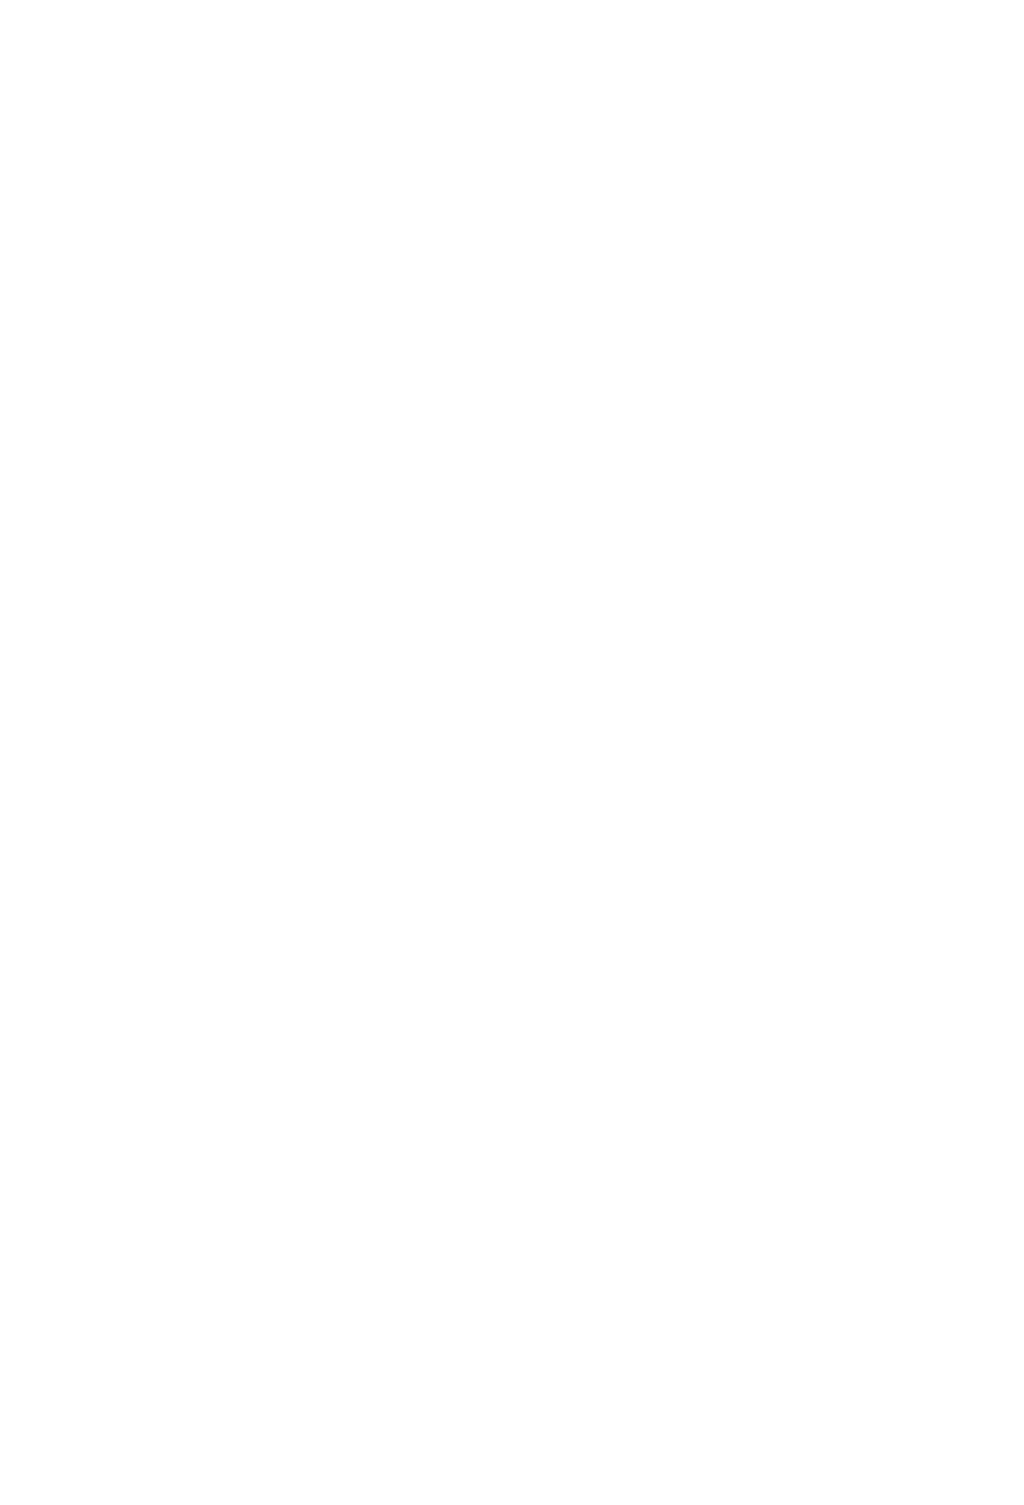 #PortiAperti